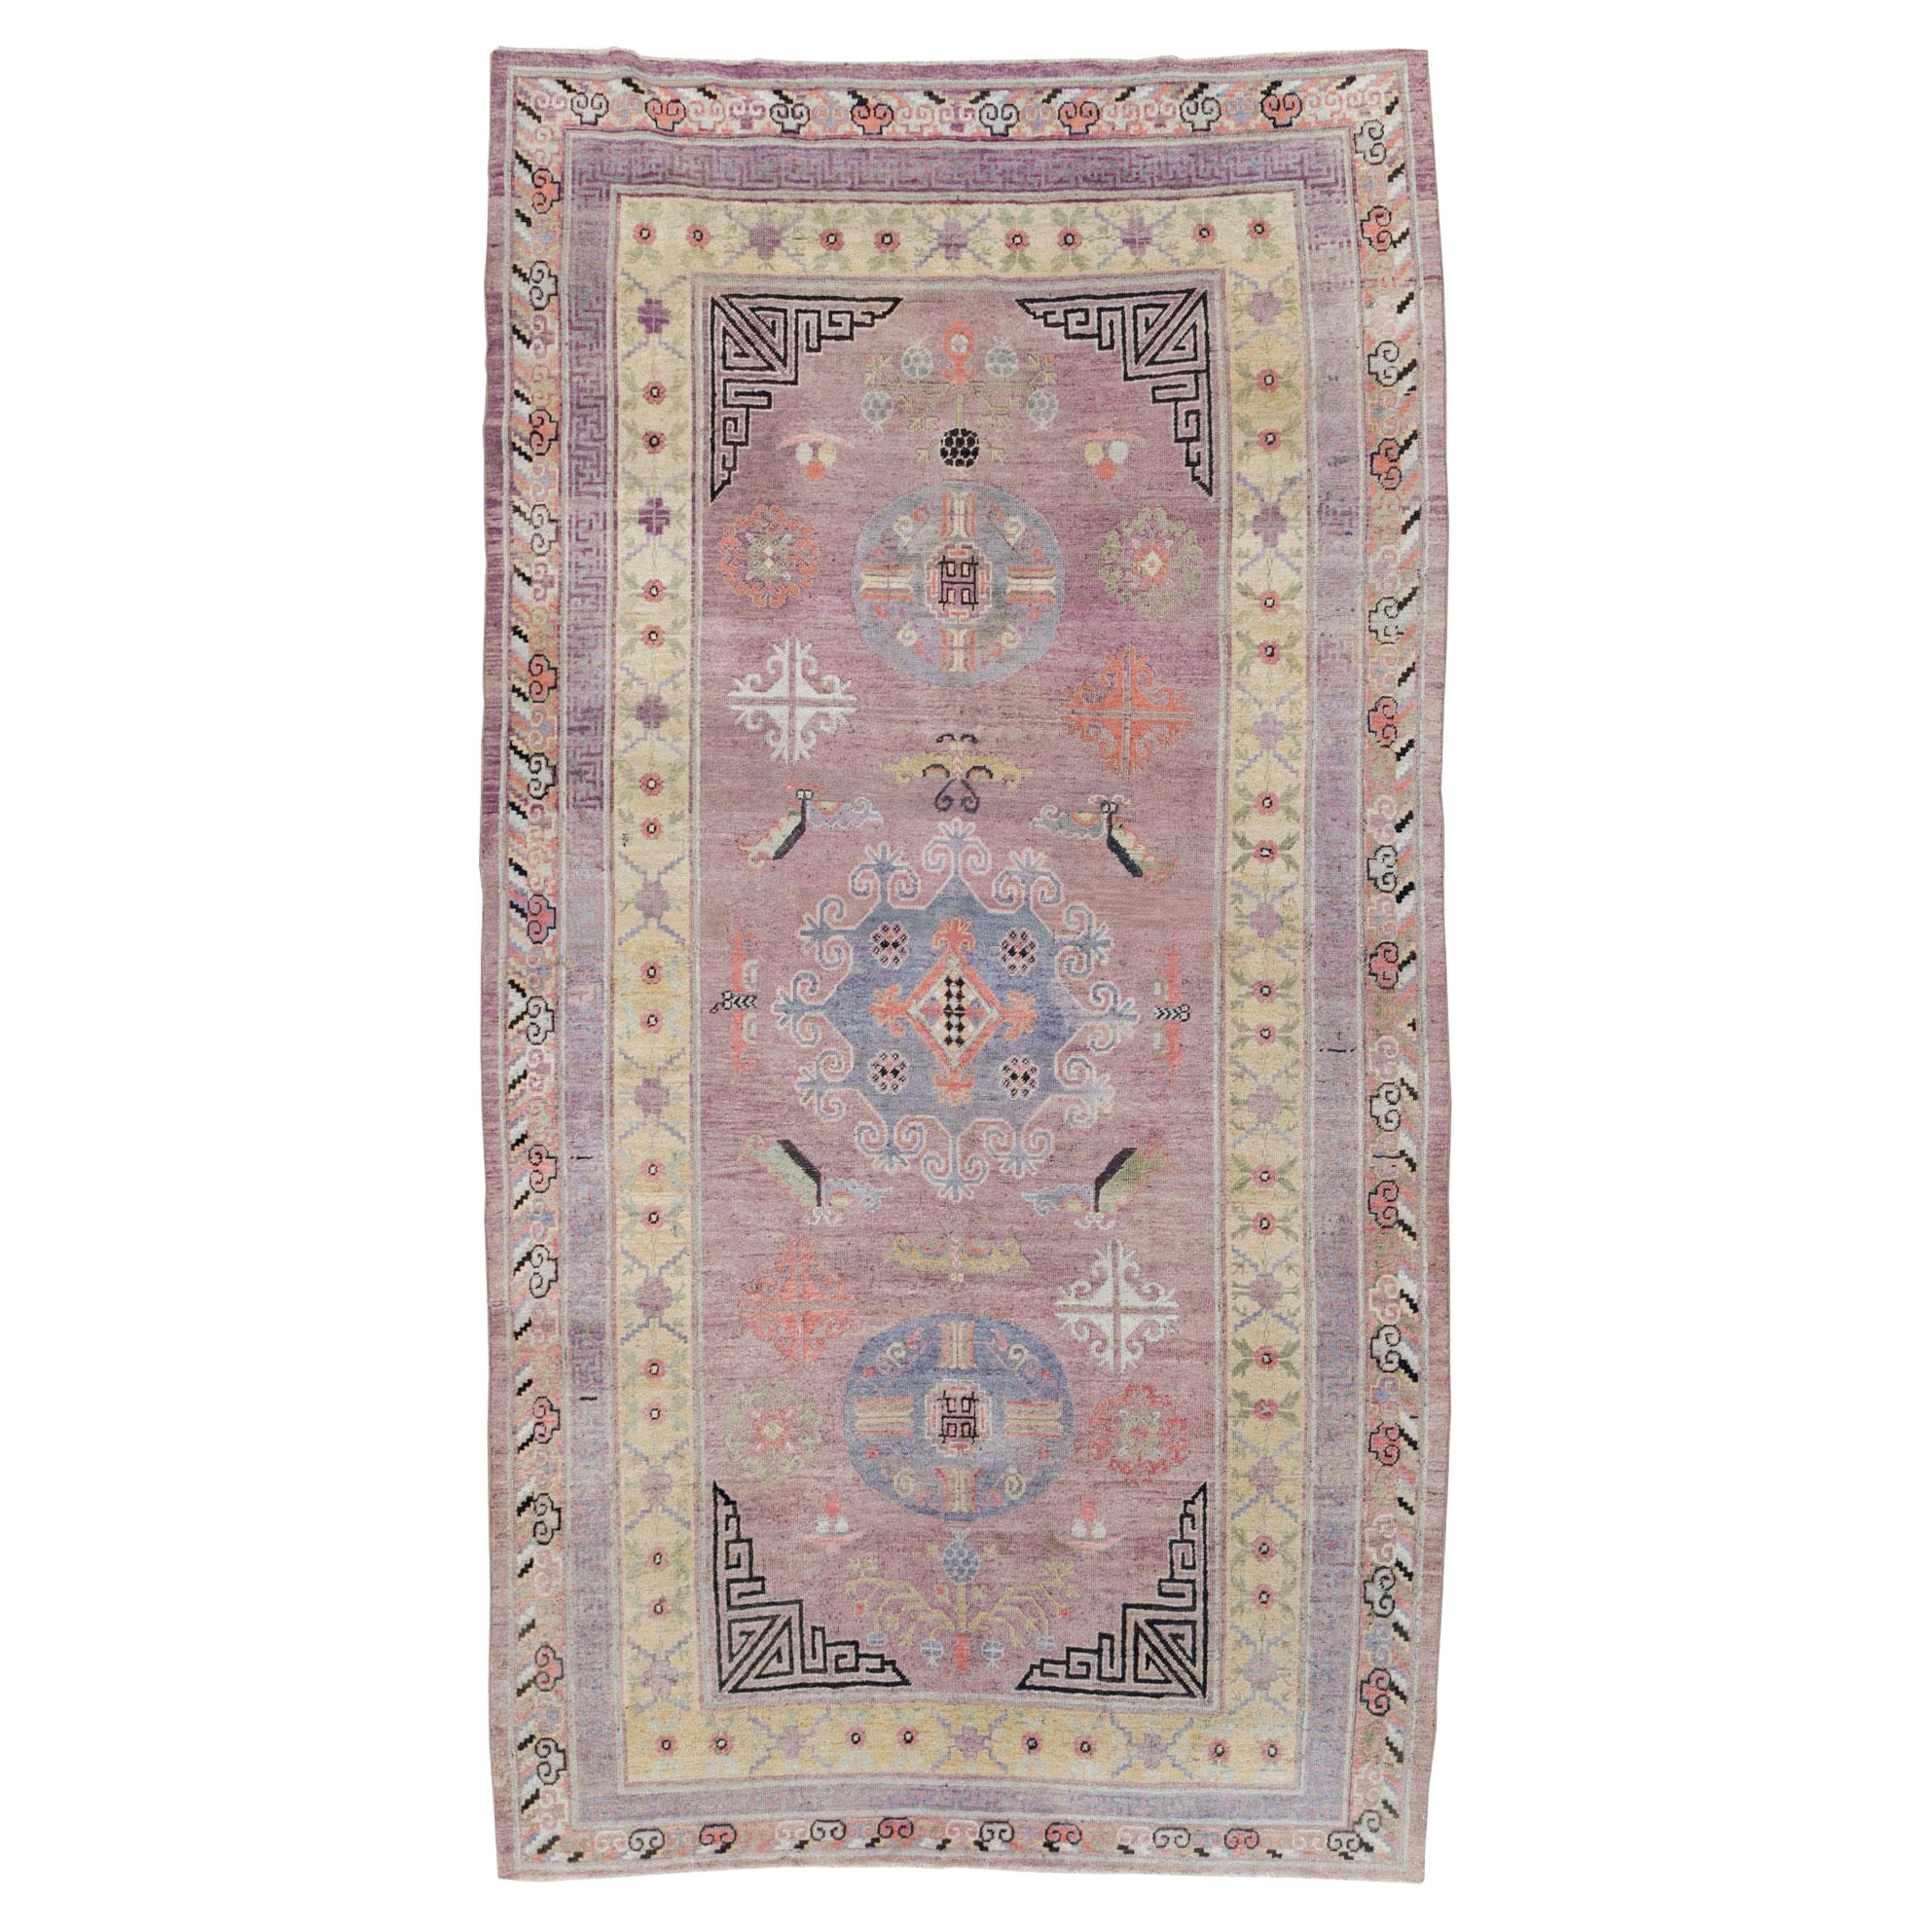 Early 20th Century Handmade East Turkestan Khotan Gallery Carpet